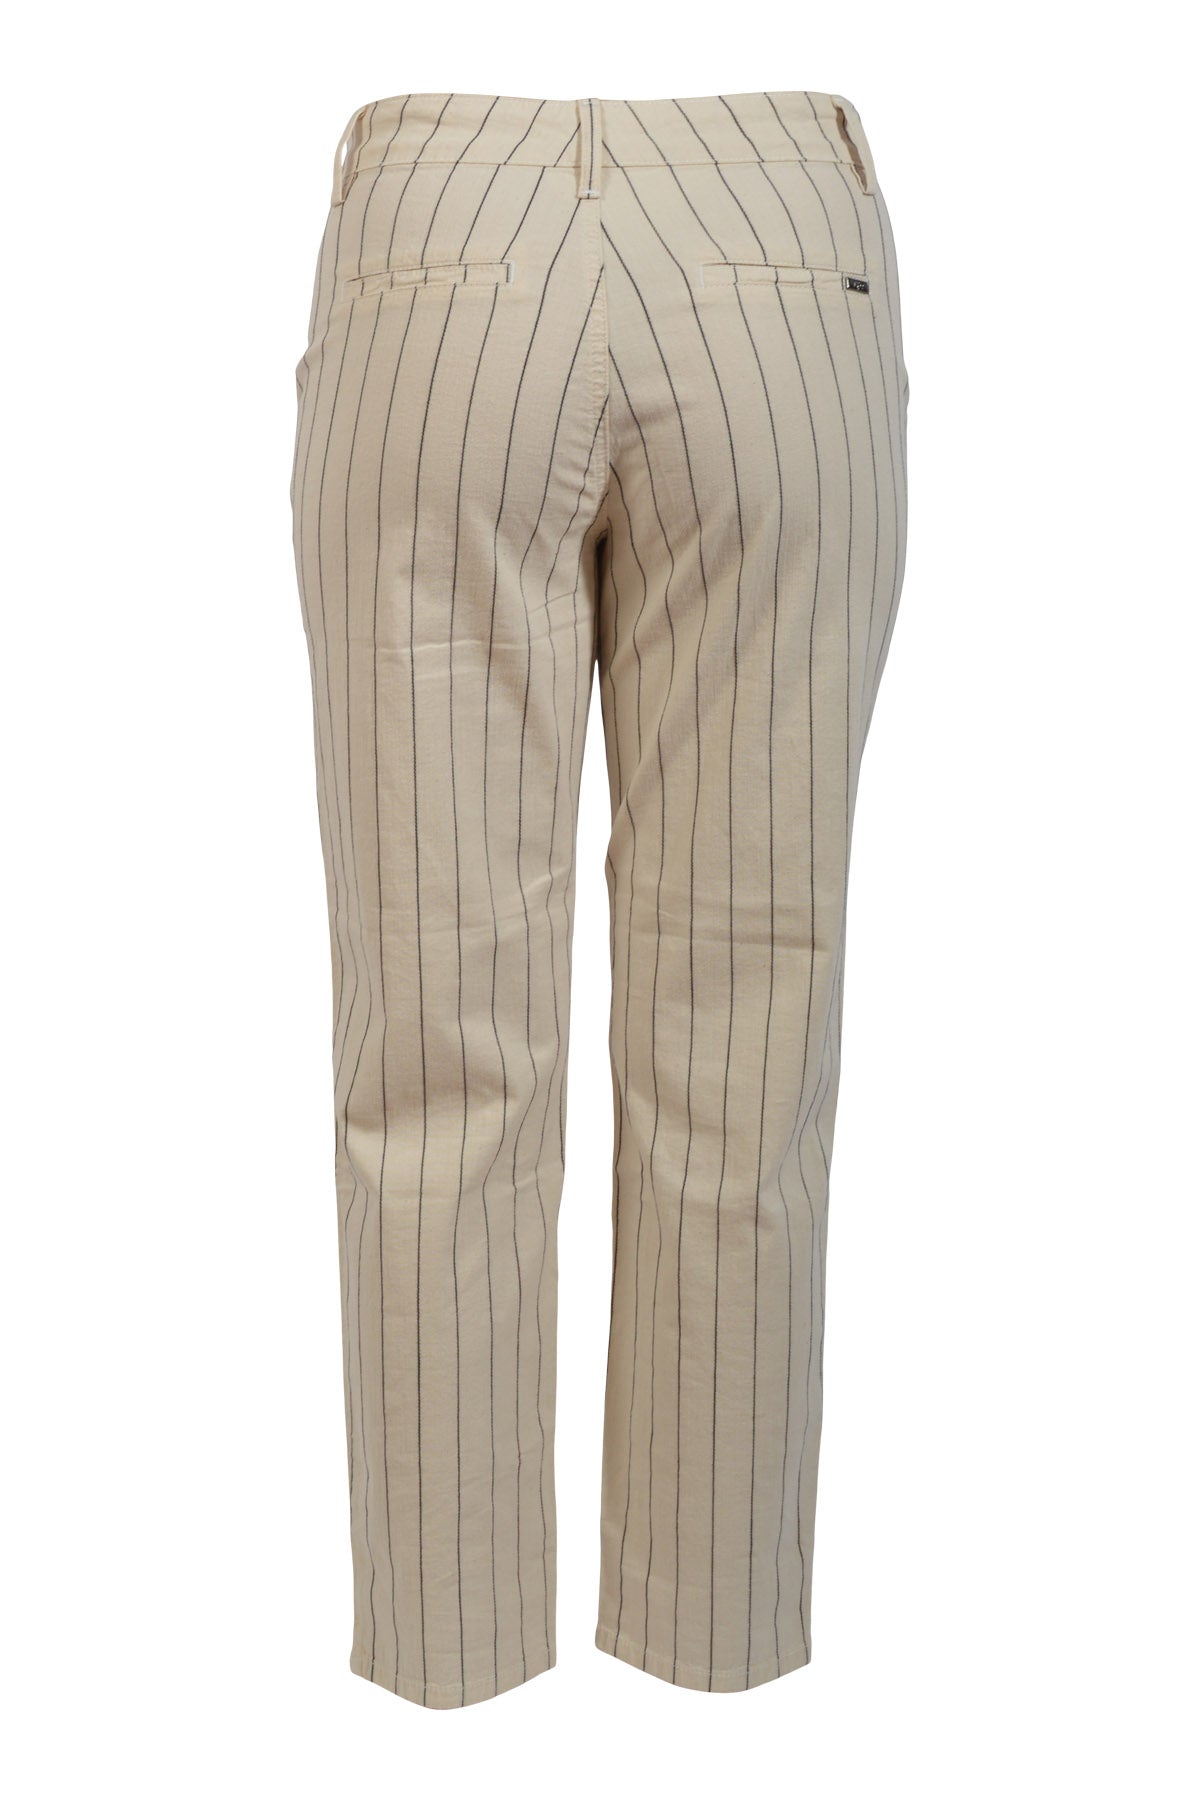 Jonny Q Jeans P1530 Linen Stripe, Warm Off-white